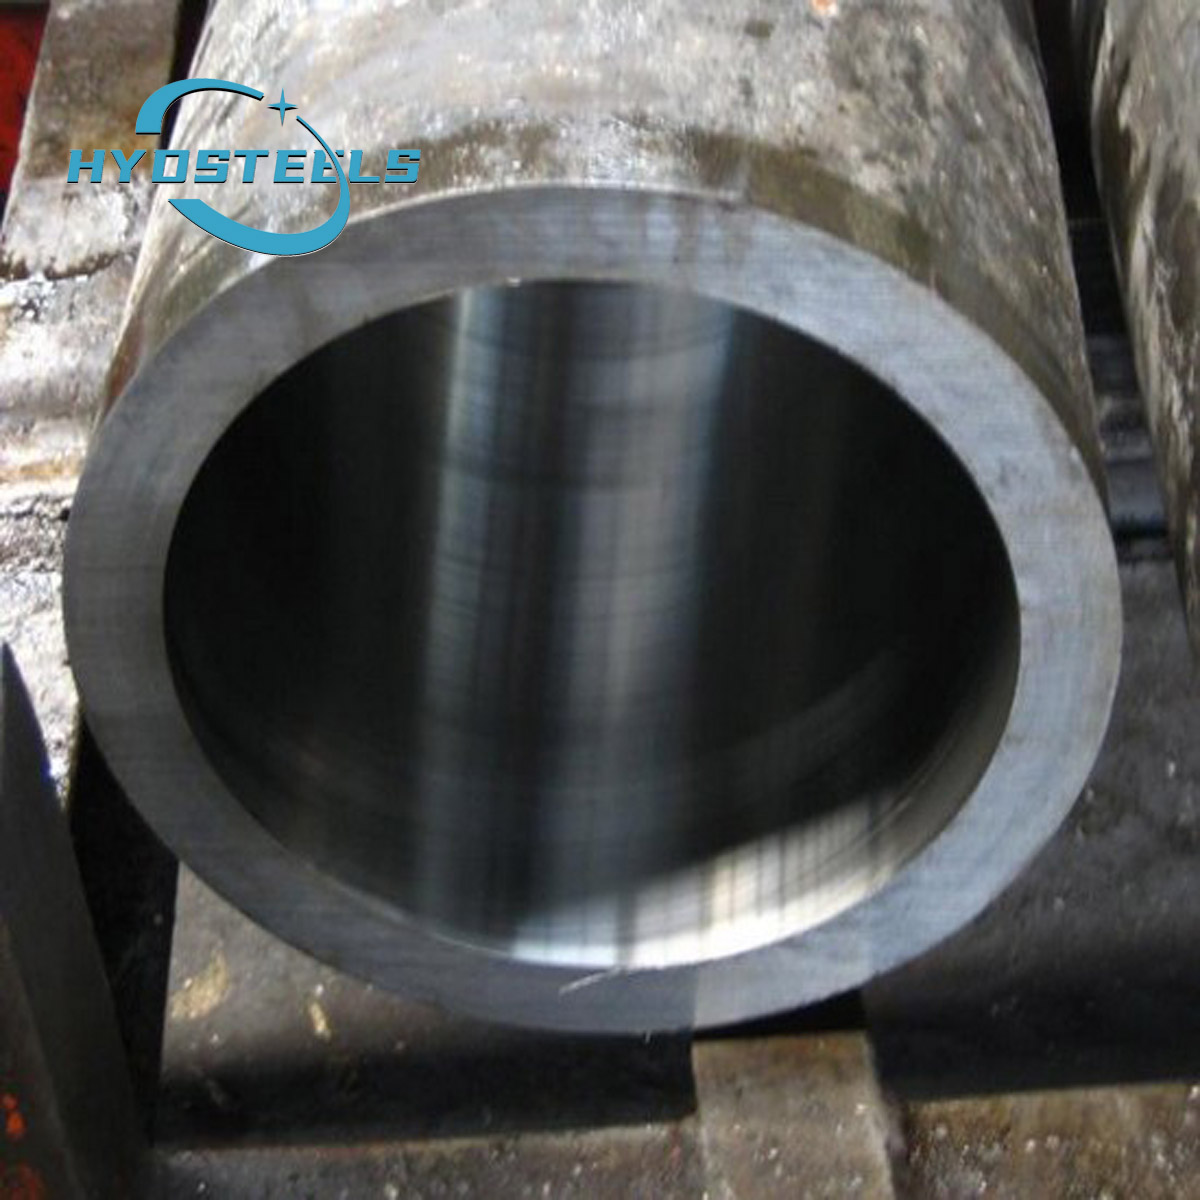 Hydraulic Tubing Seamless Steel Honed Tube Manufacturers